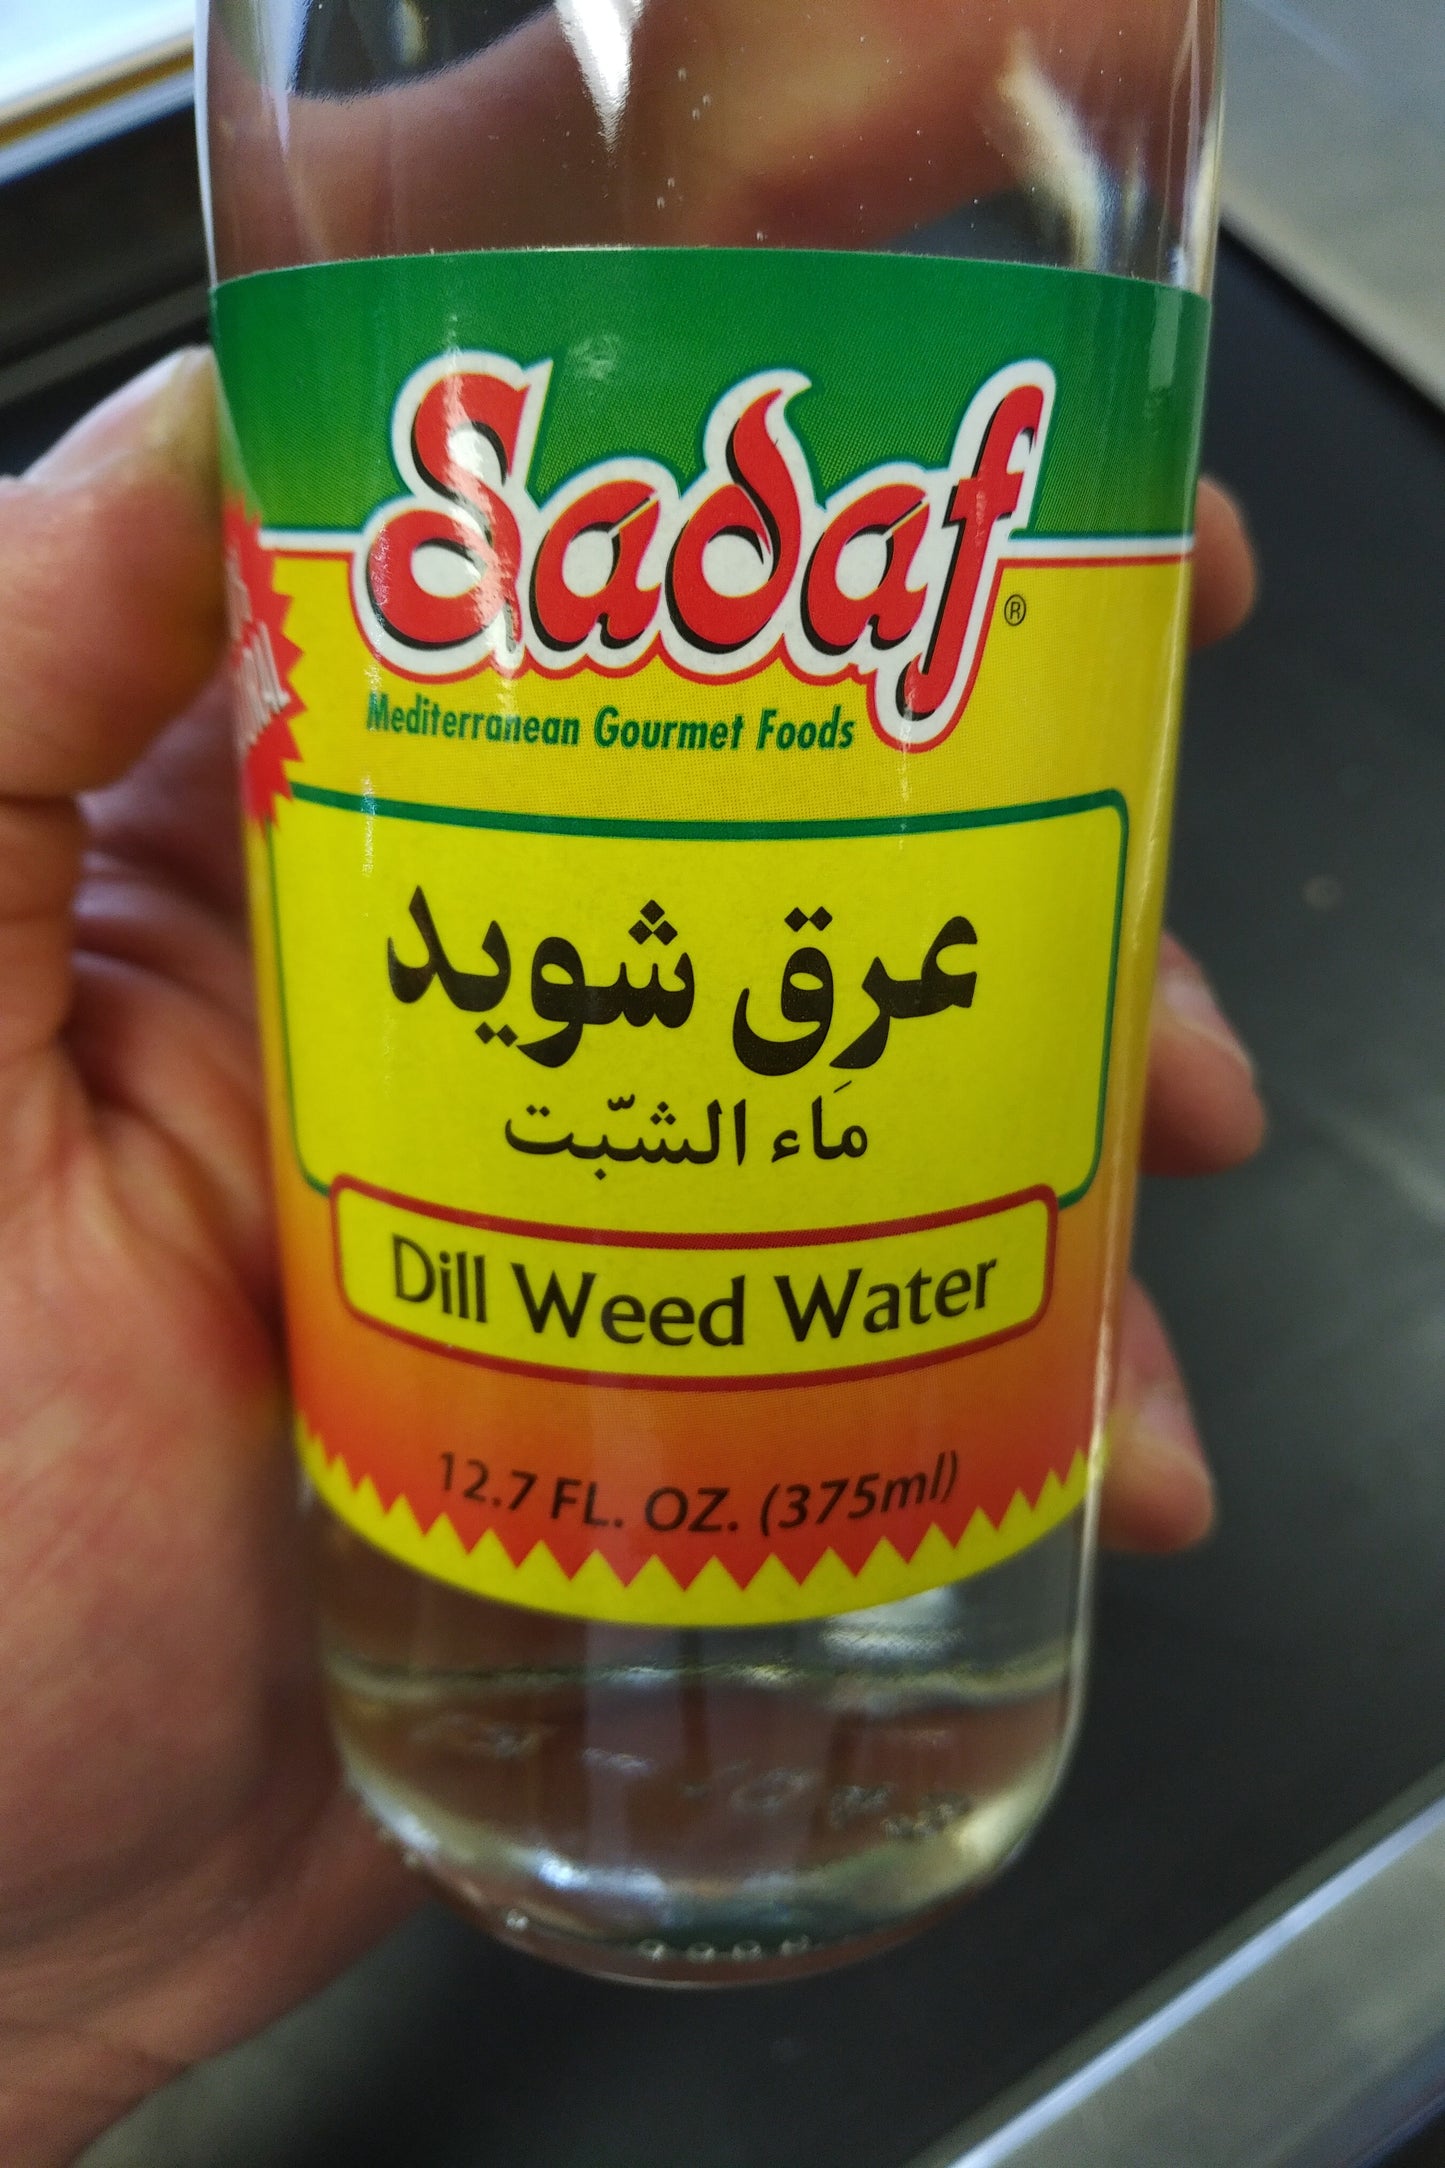 Sadaf Dill Weed Water 12.7oz